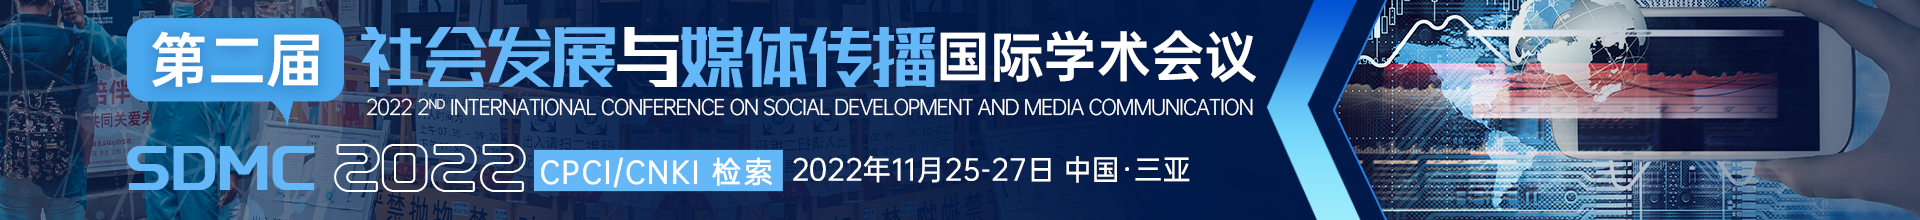 11月三亚站- SDMC 2022-会议云banner-何雪仪-20220628.png